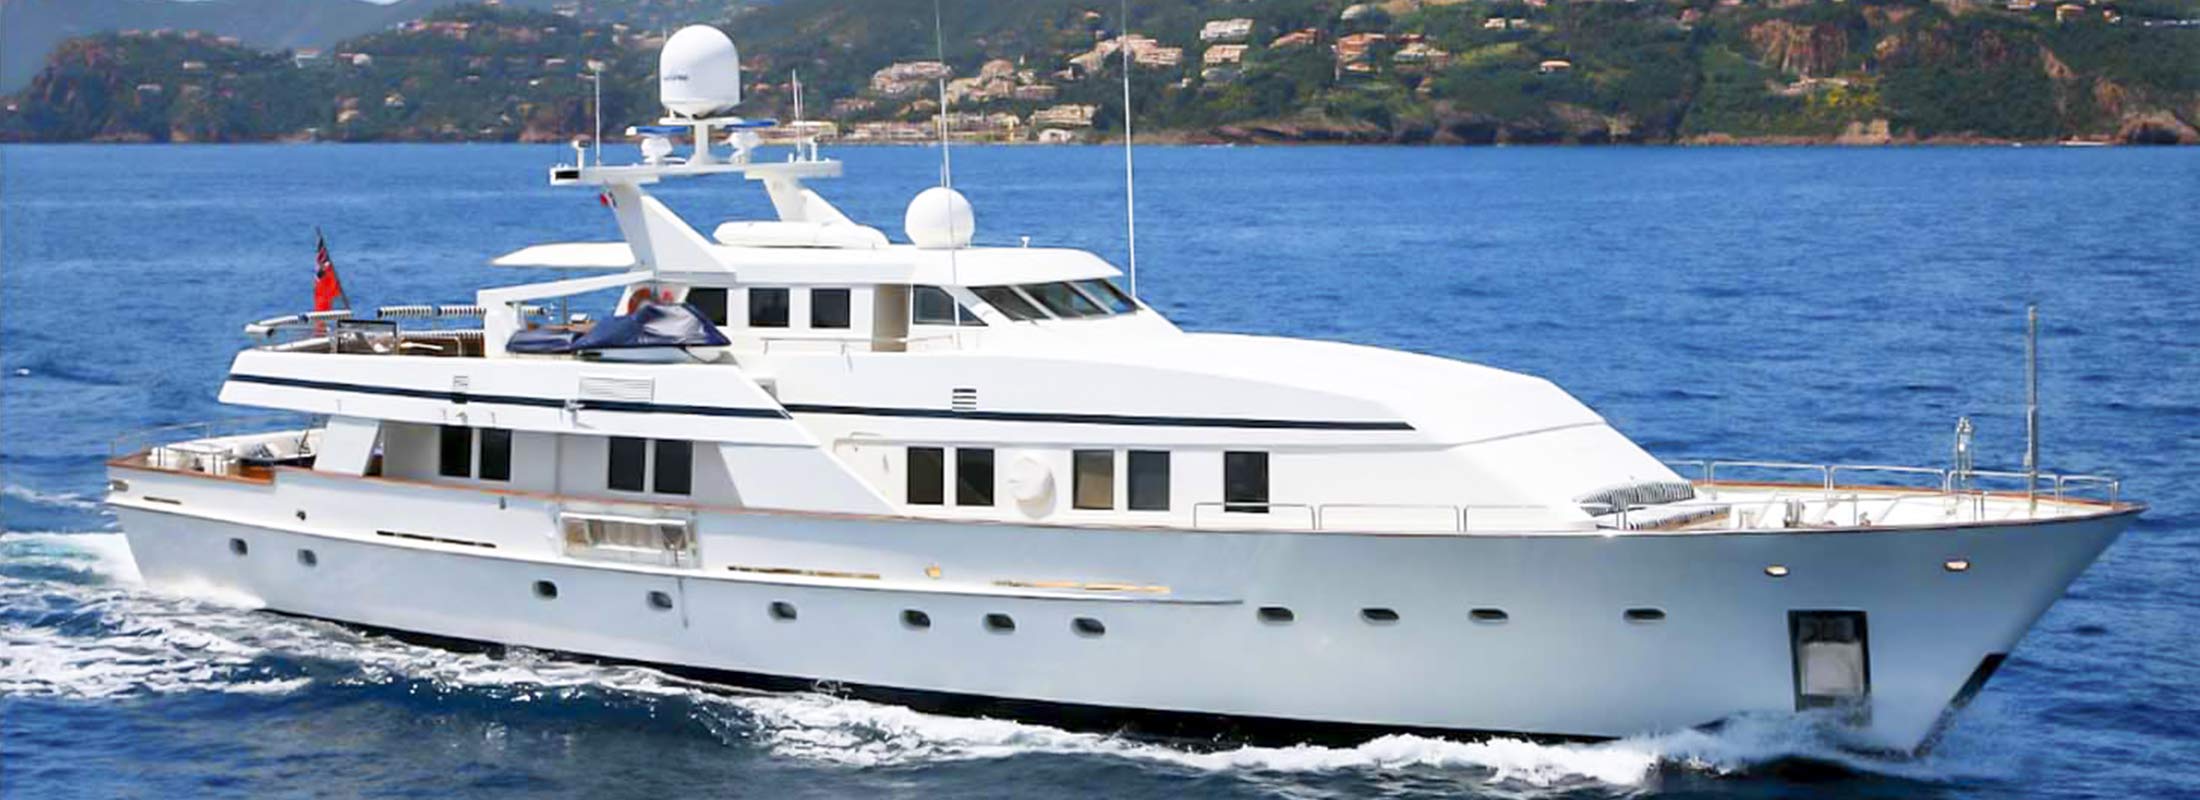 Fiorente Motor Yacht for Charter Mediterranean slider 1